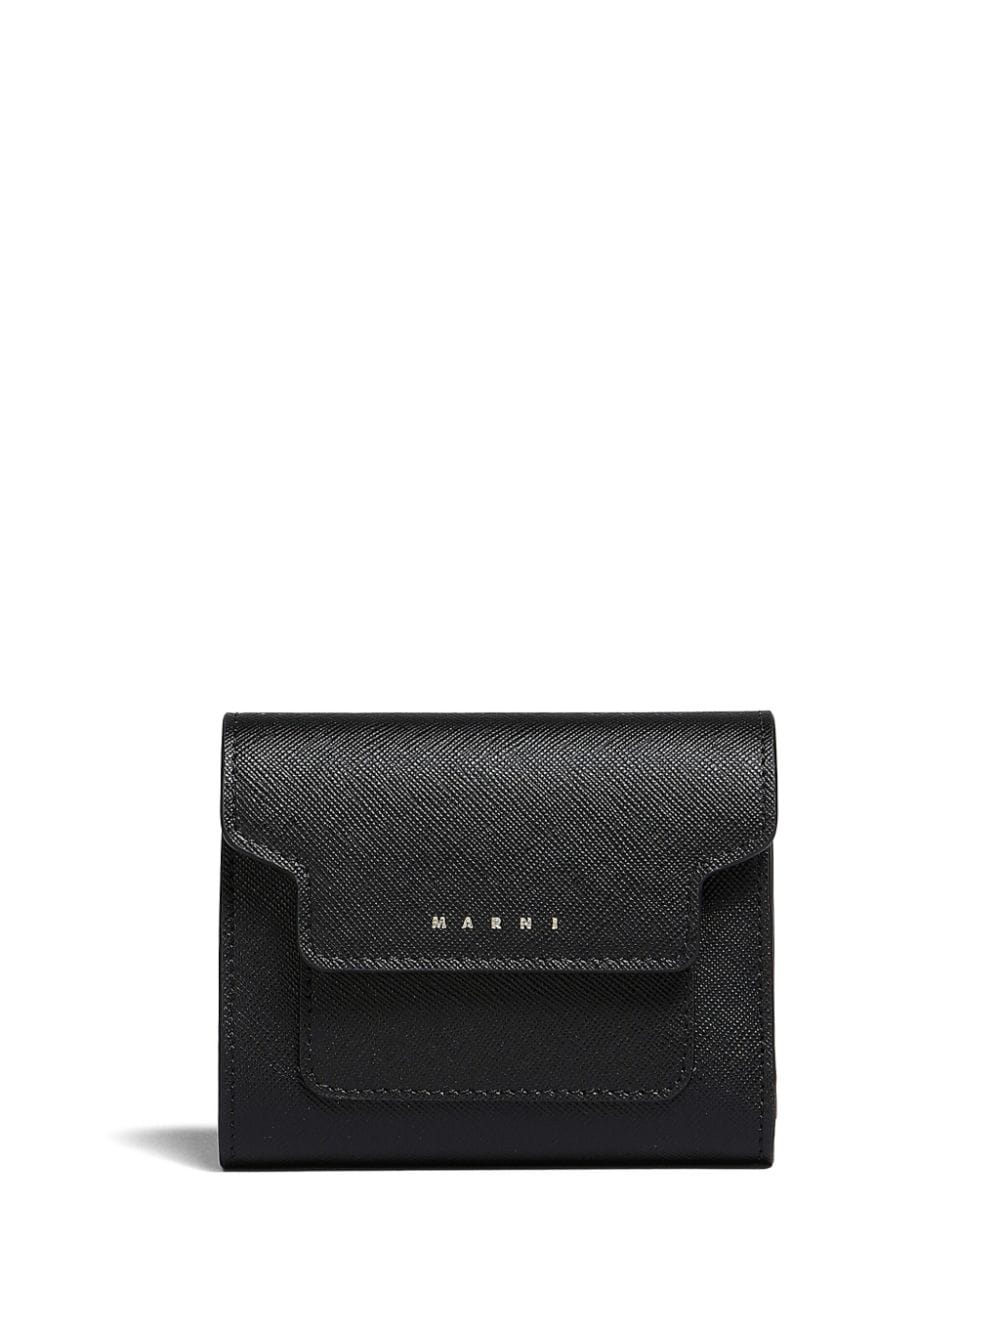 Marni logo-print leather wallet - Black von Marni